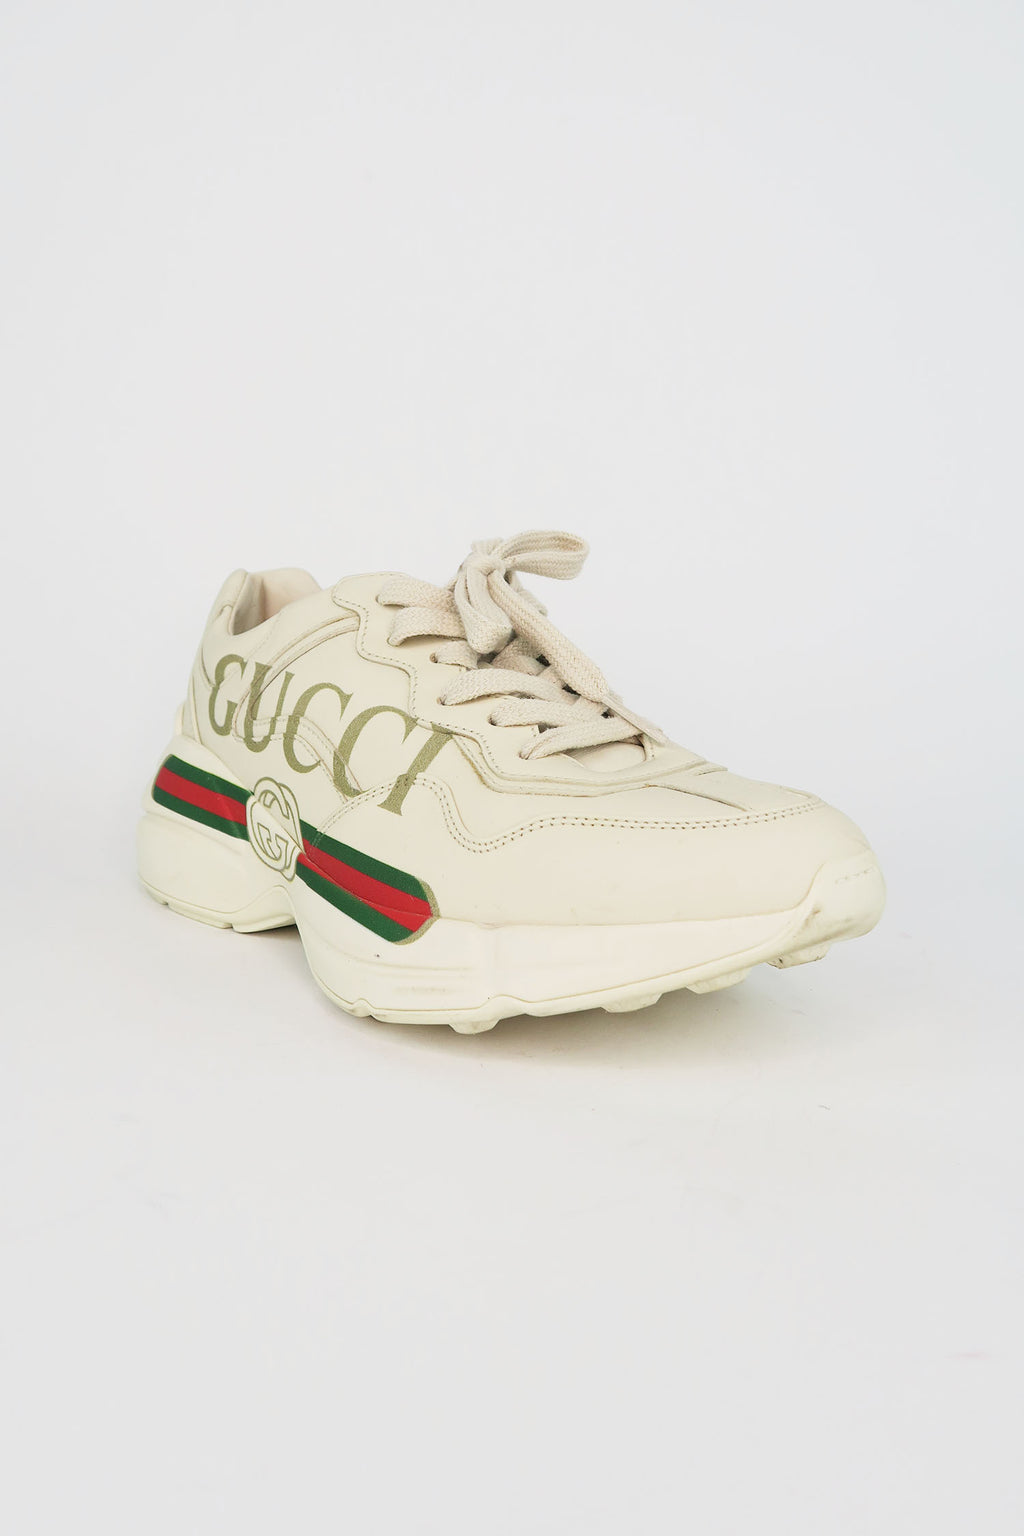 Gucci Rython Chunky Sneakers sz 37